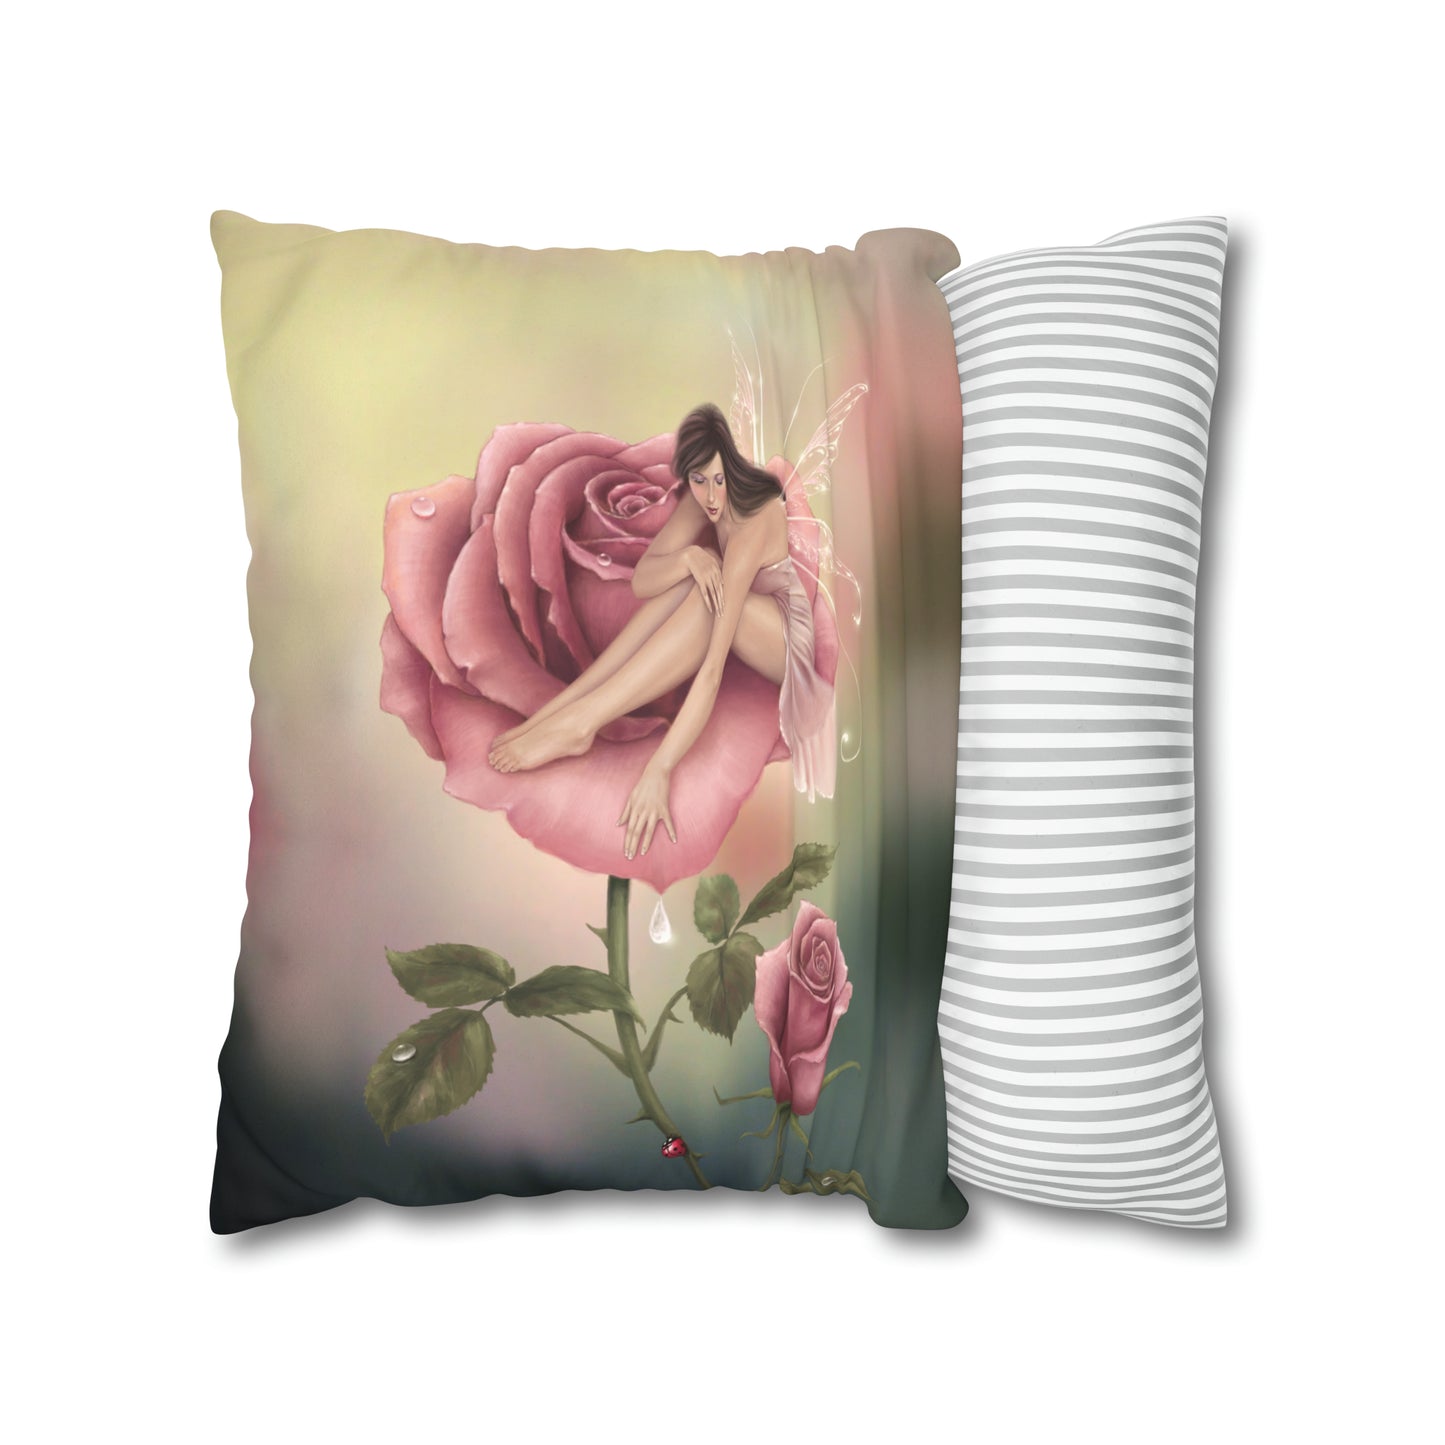 Throw Pillow Cover - Rose